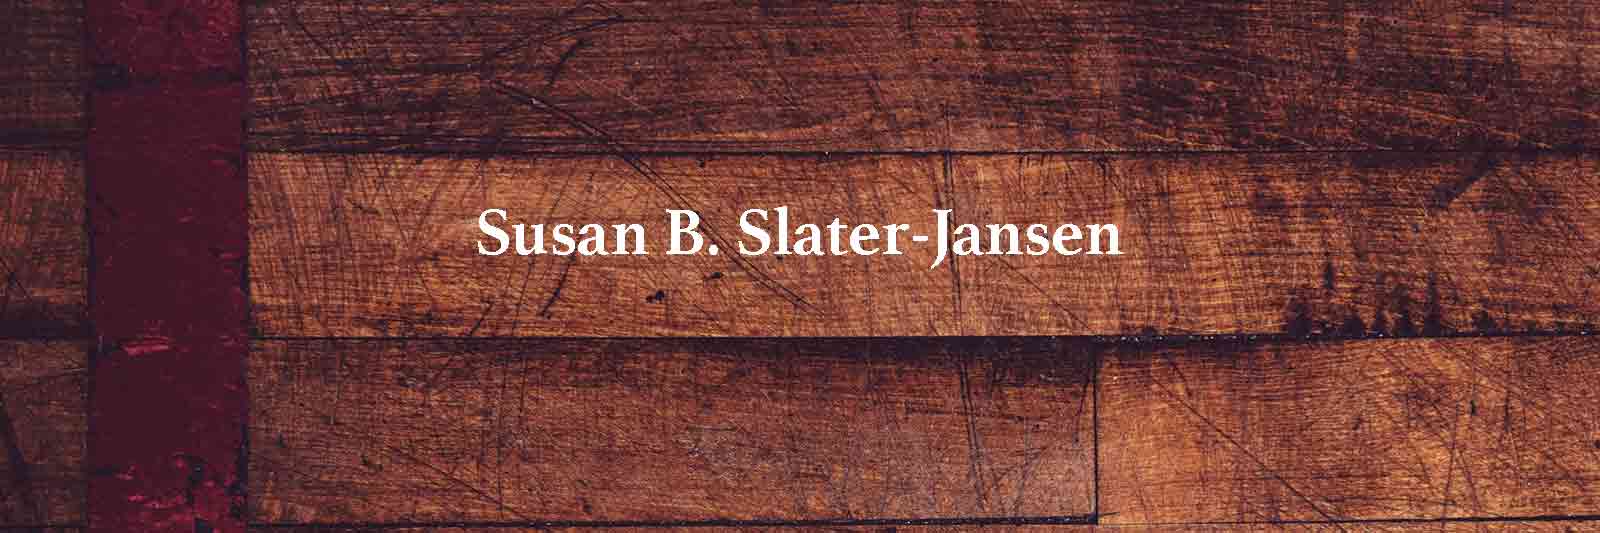 Susan B. Slater-Jansen